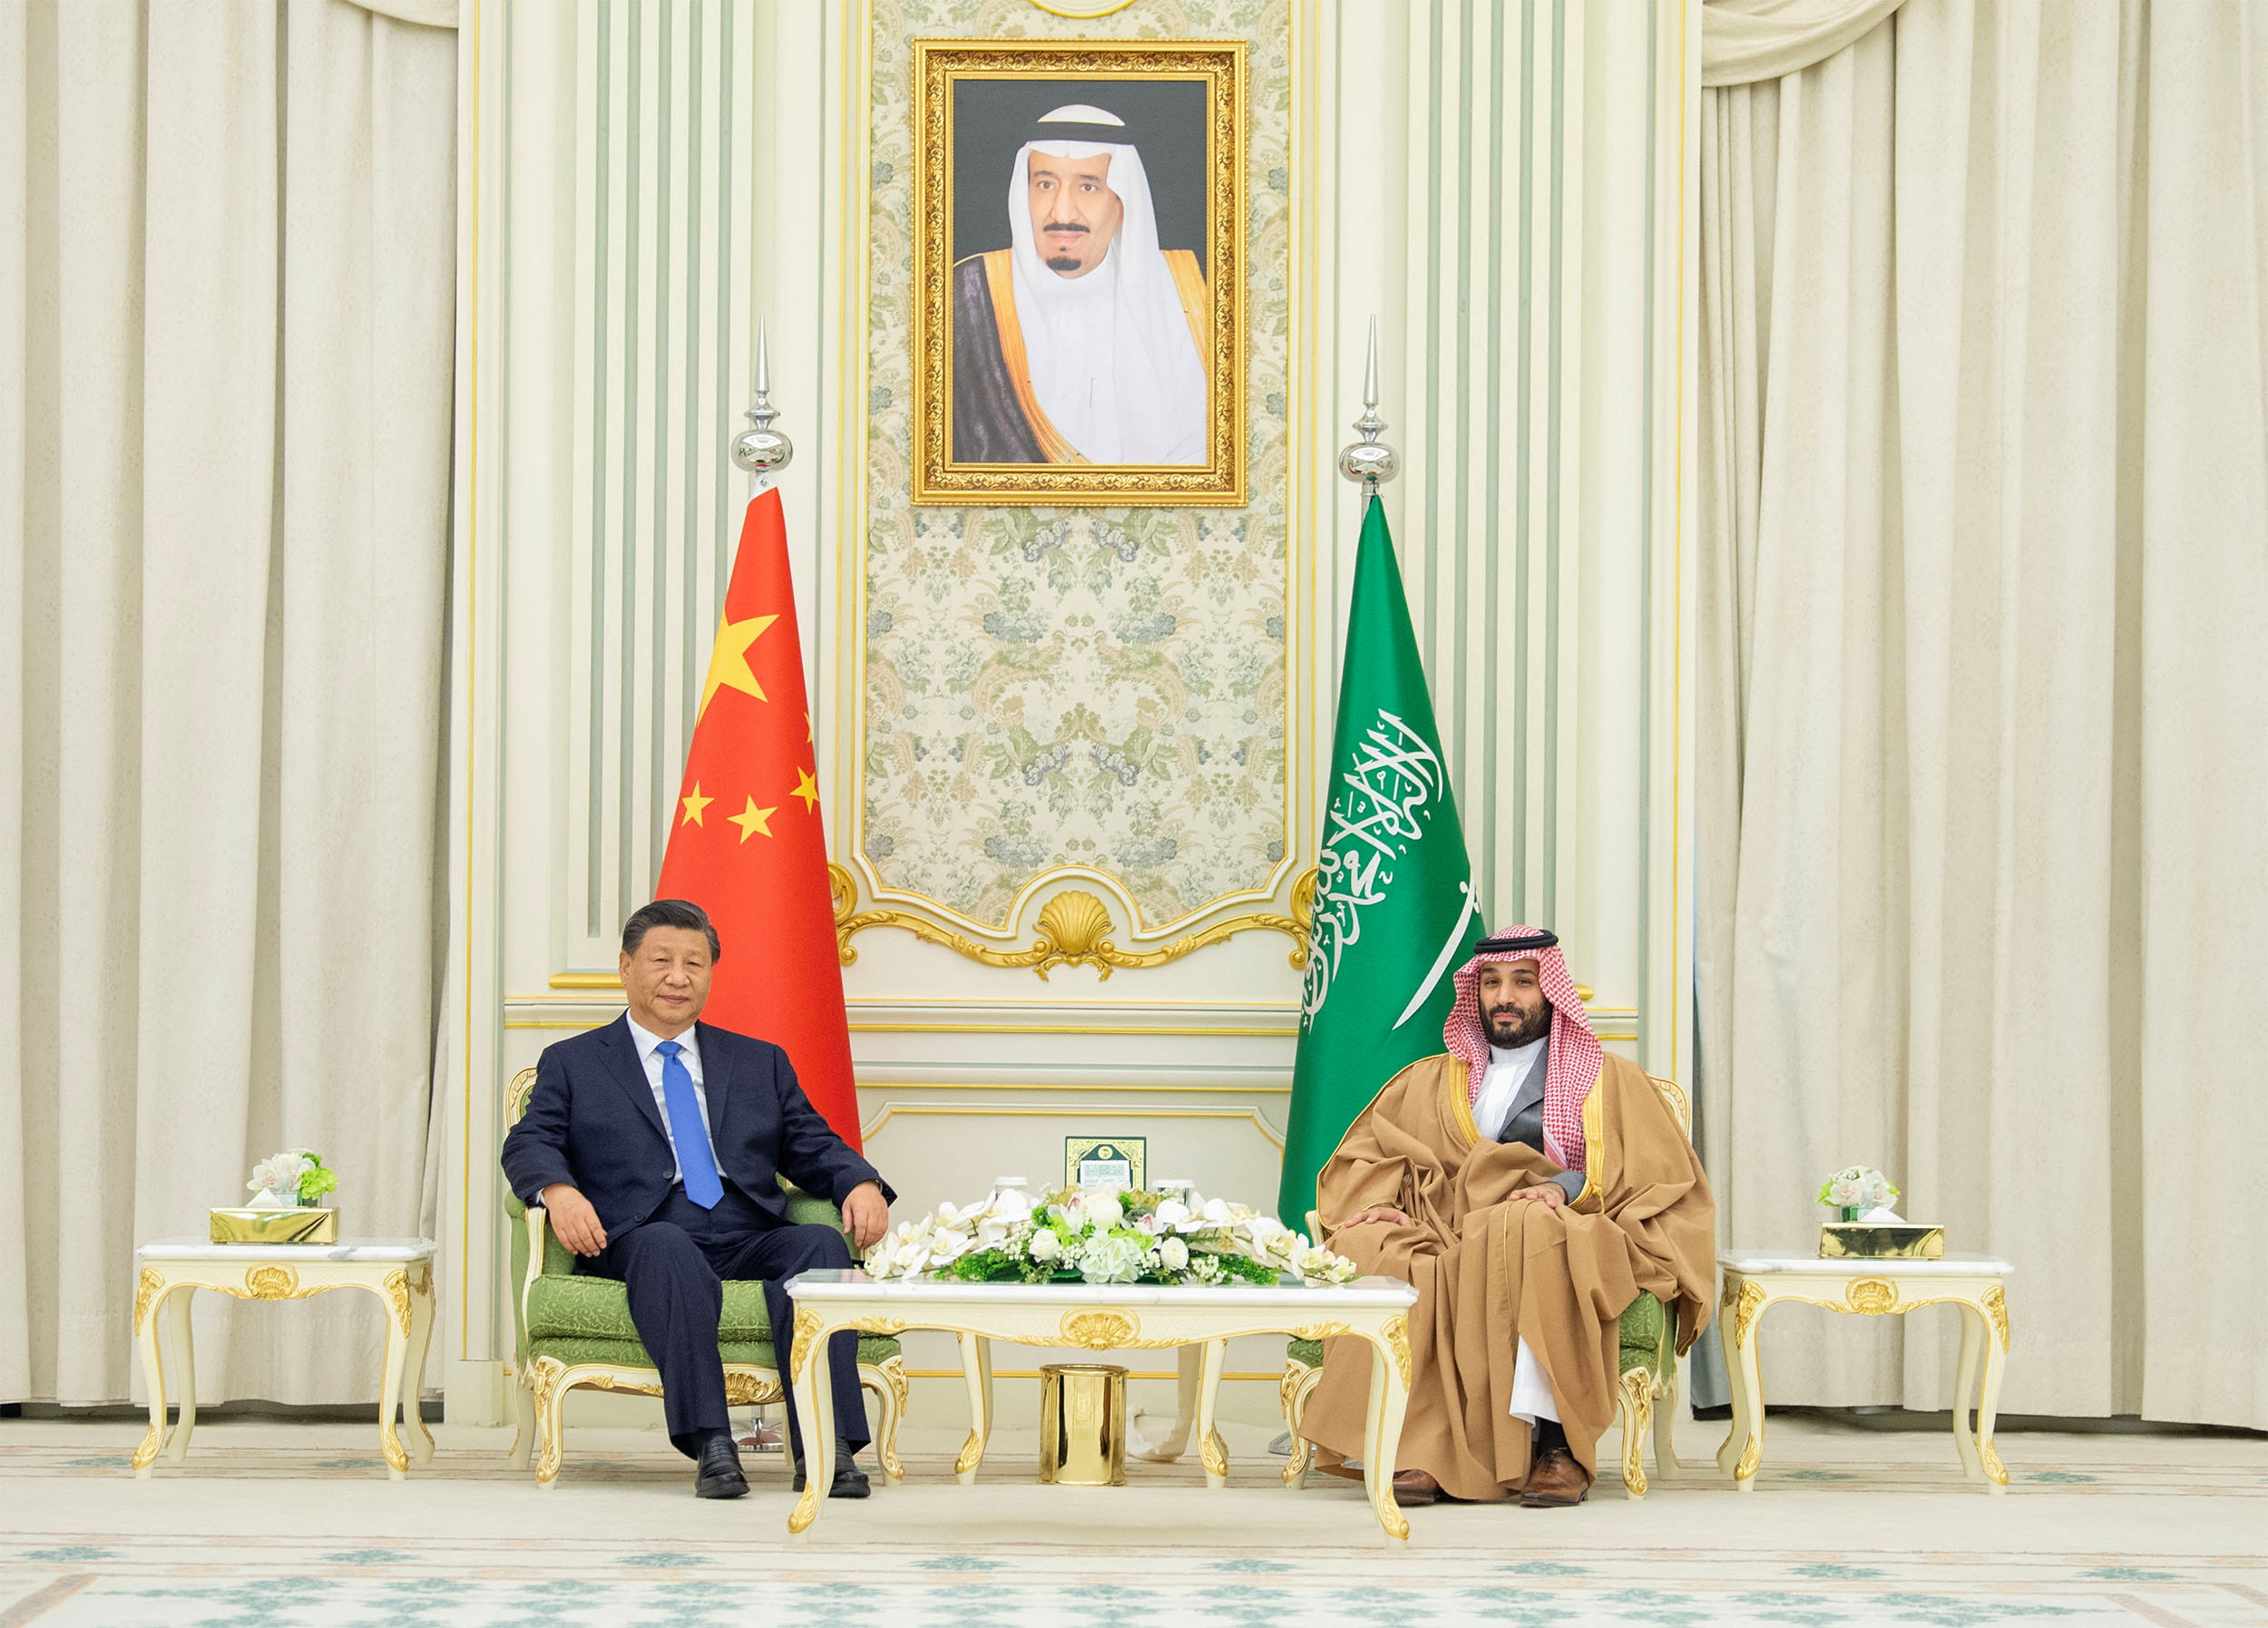 Saudi Crown Prince Mohammed Bin Salman meets with Chinese President Xi Jinping in Riyadh